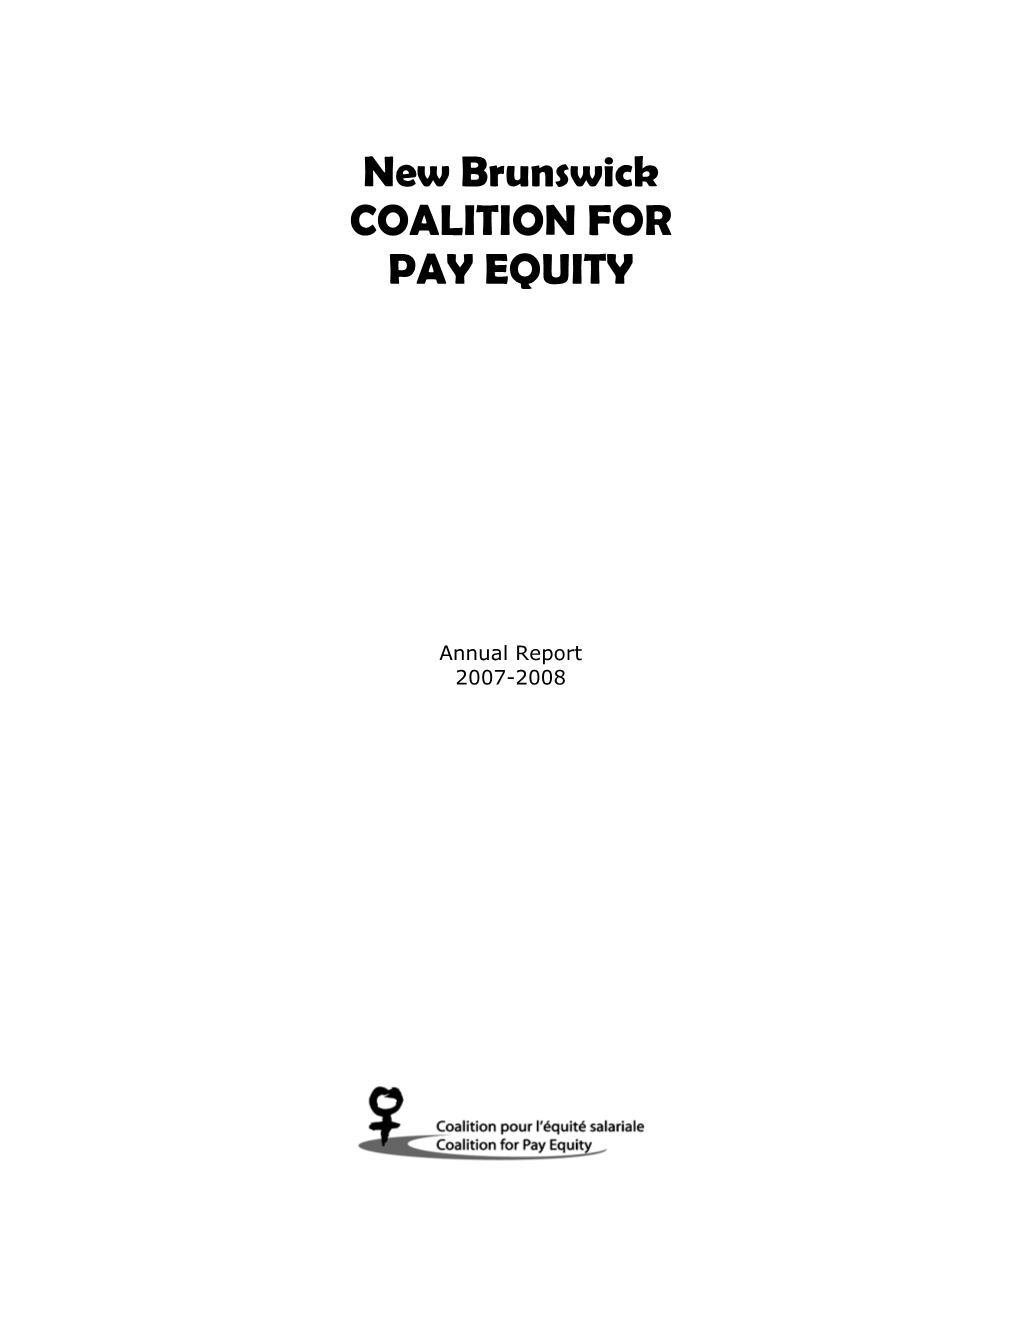 Annual Report 2007-2008